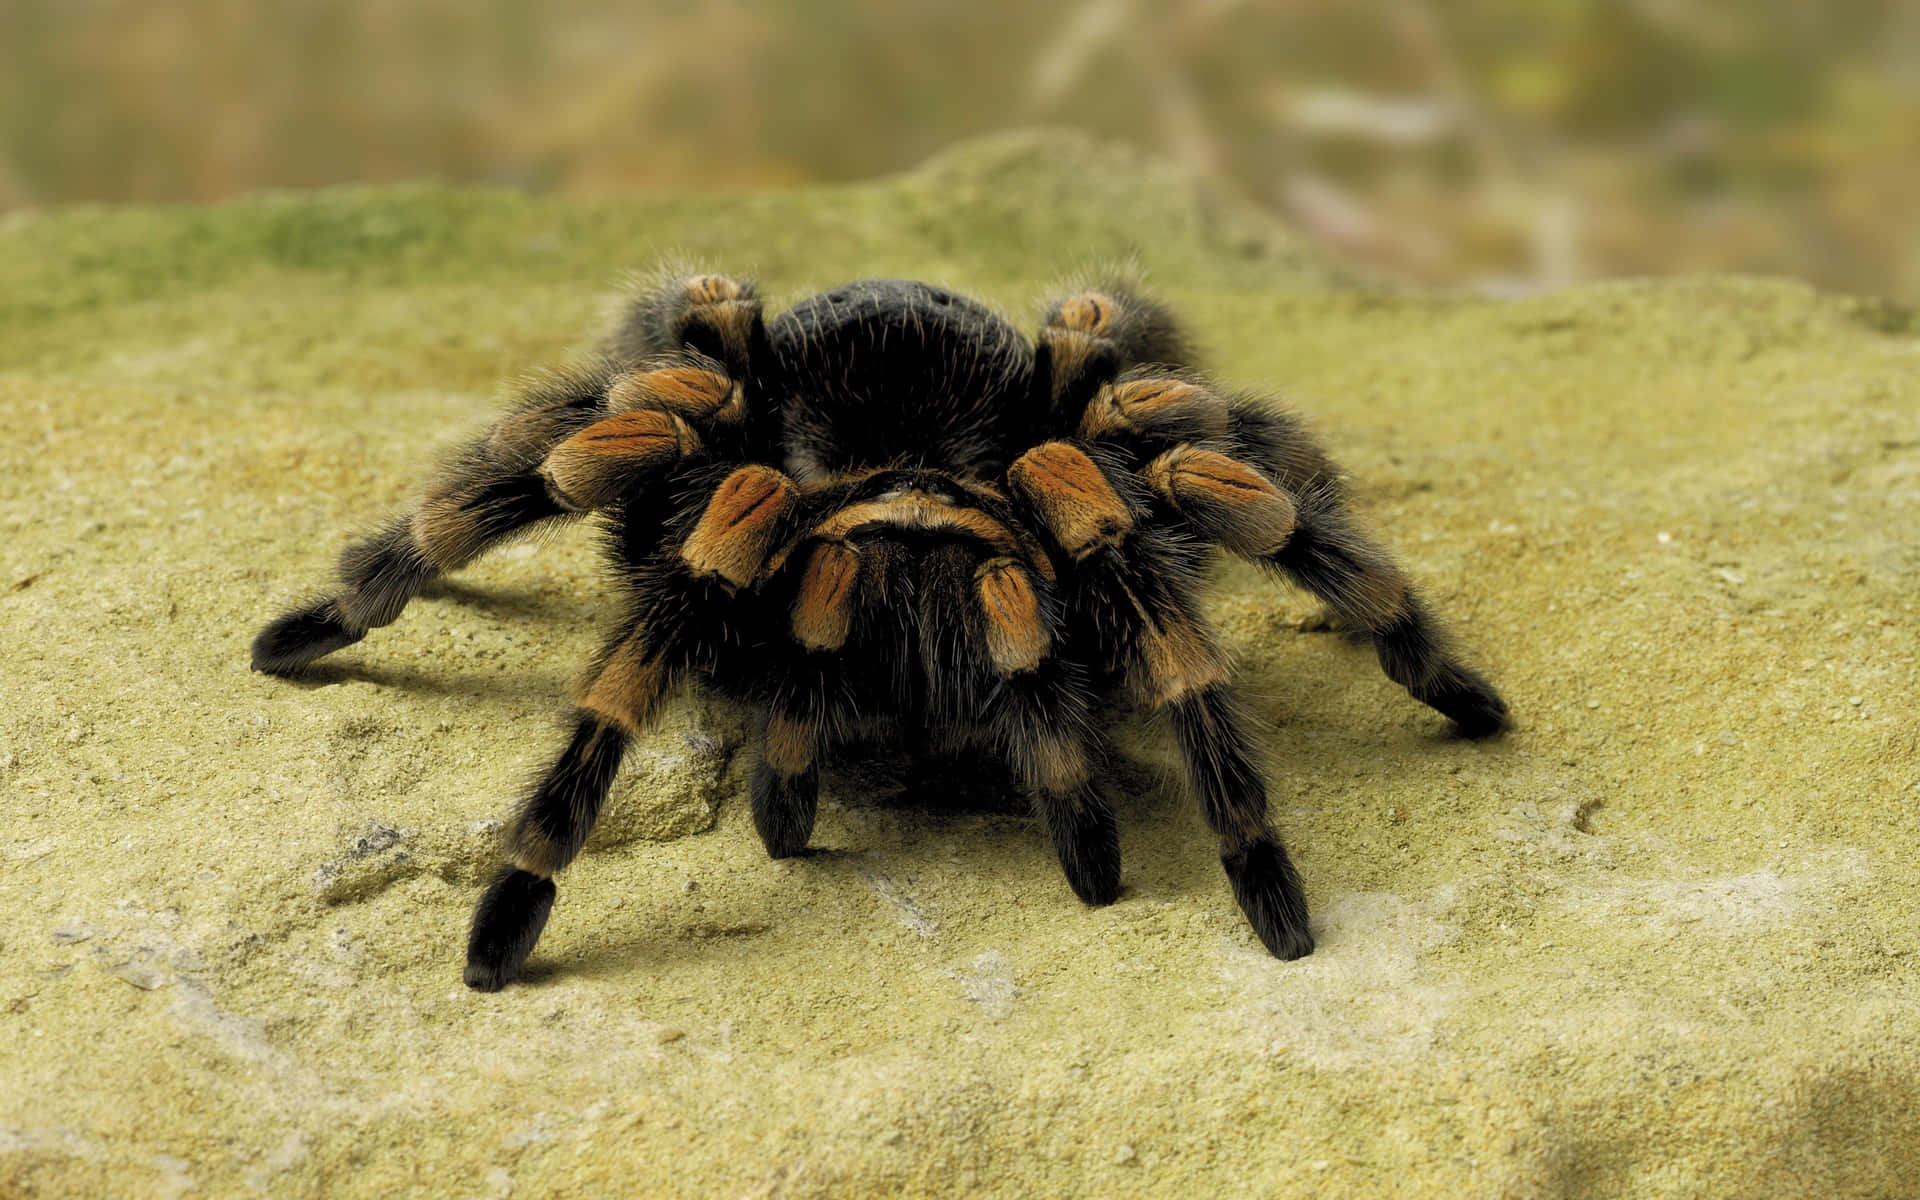 Caption: Elegant Spider Web In Dewy Morning